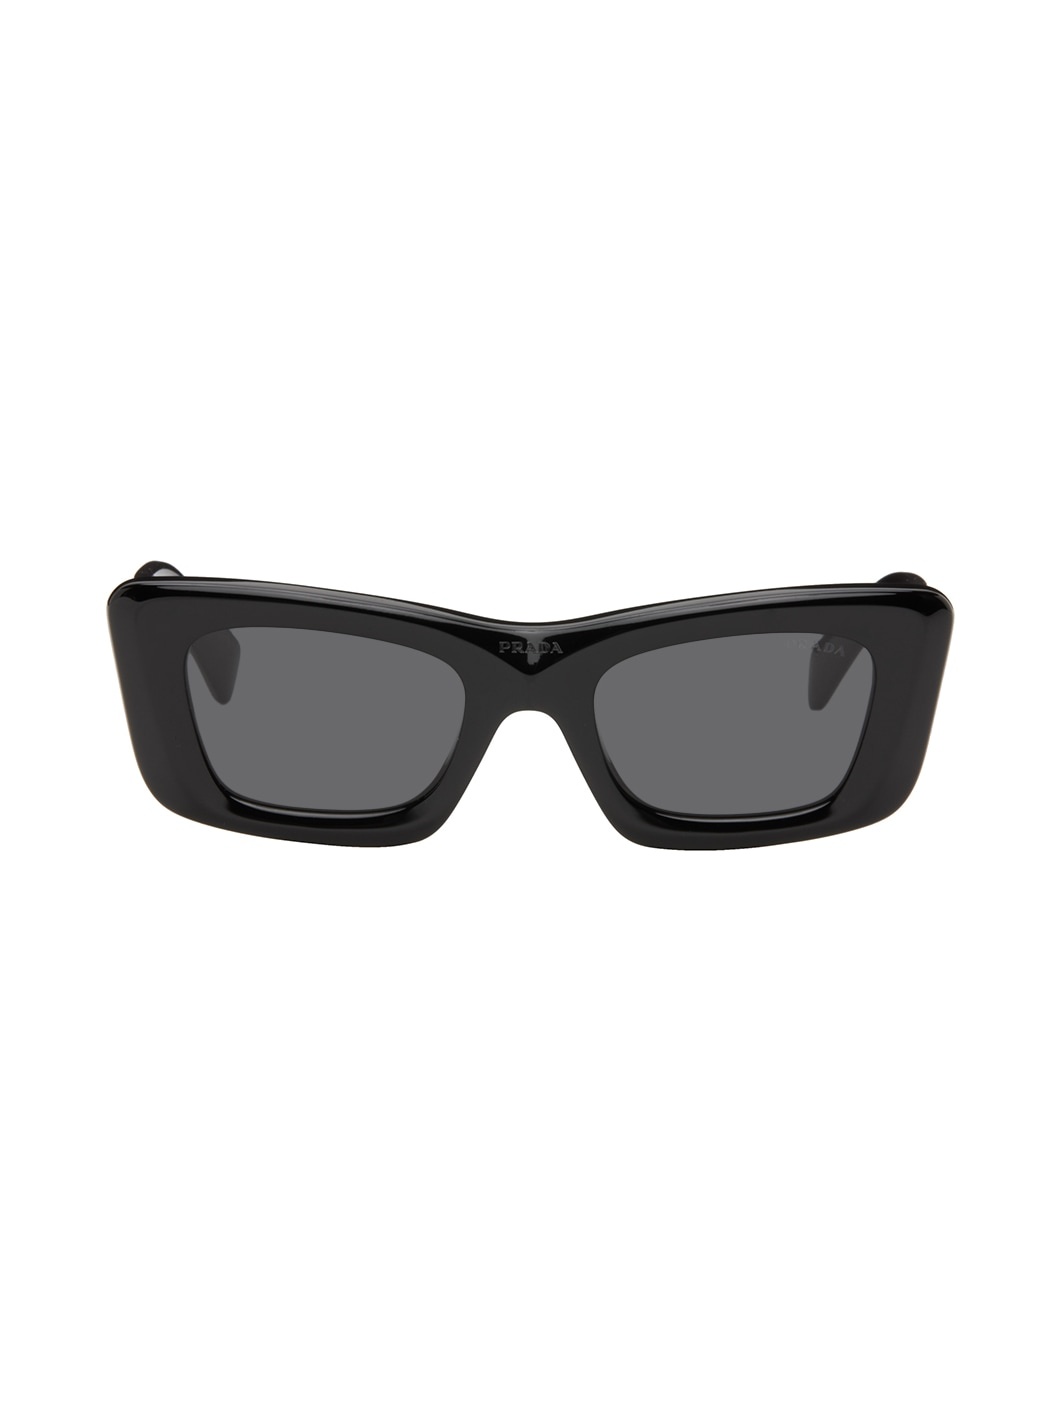 Black Cat-Eye Sunglasses - 1